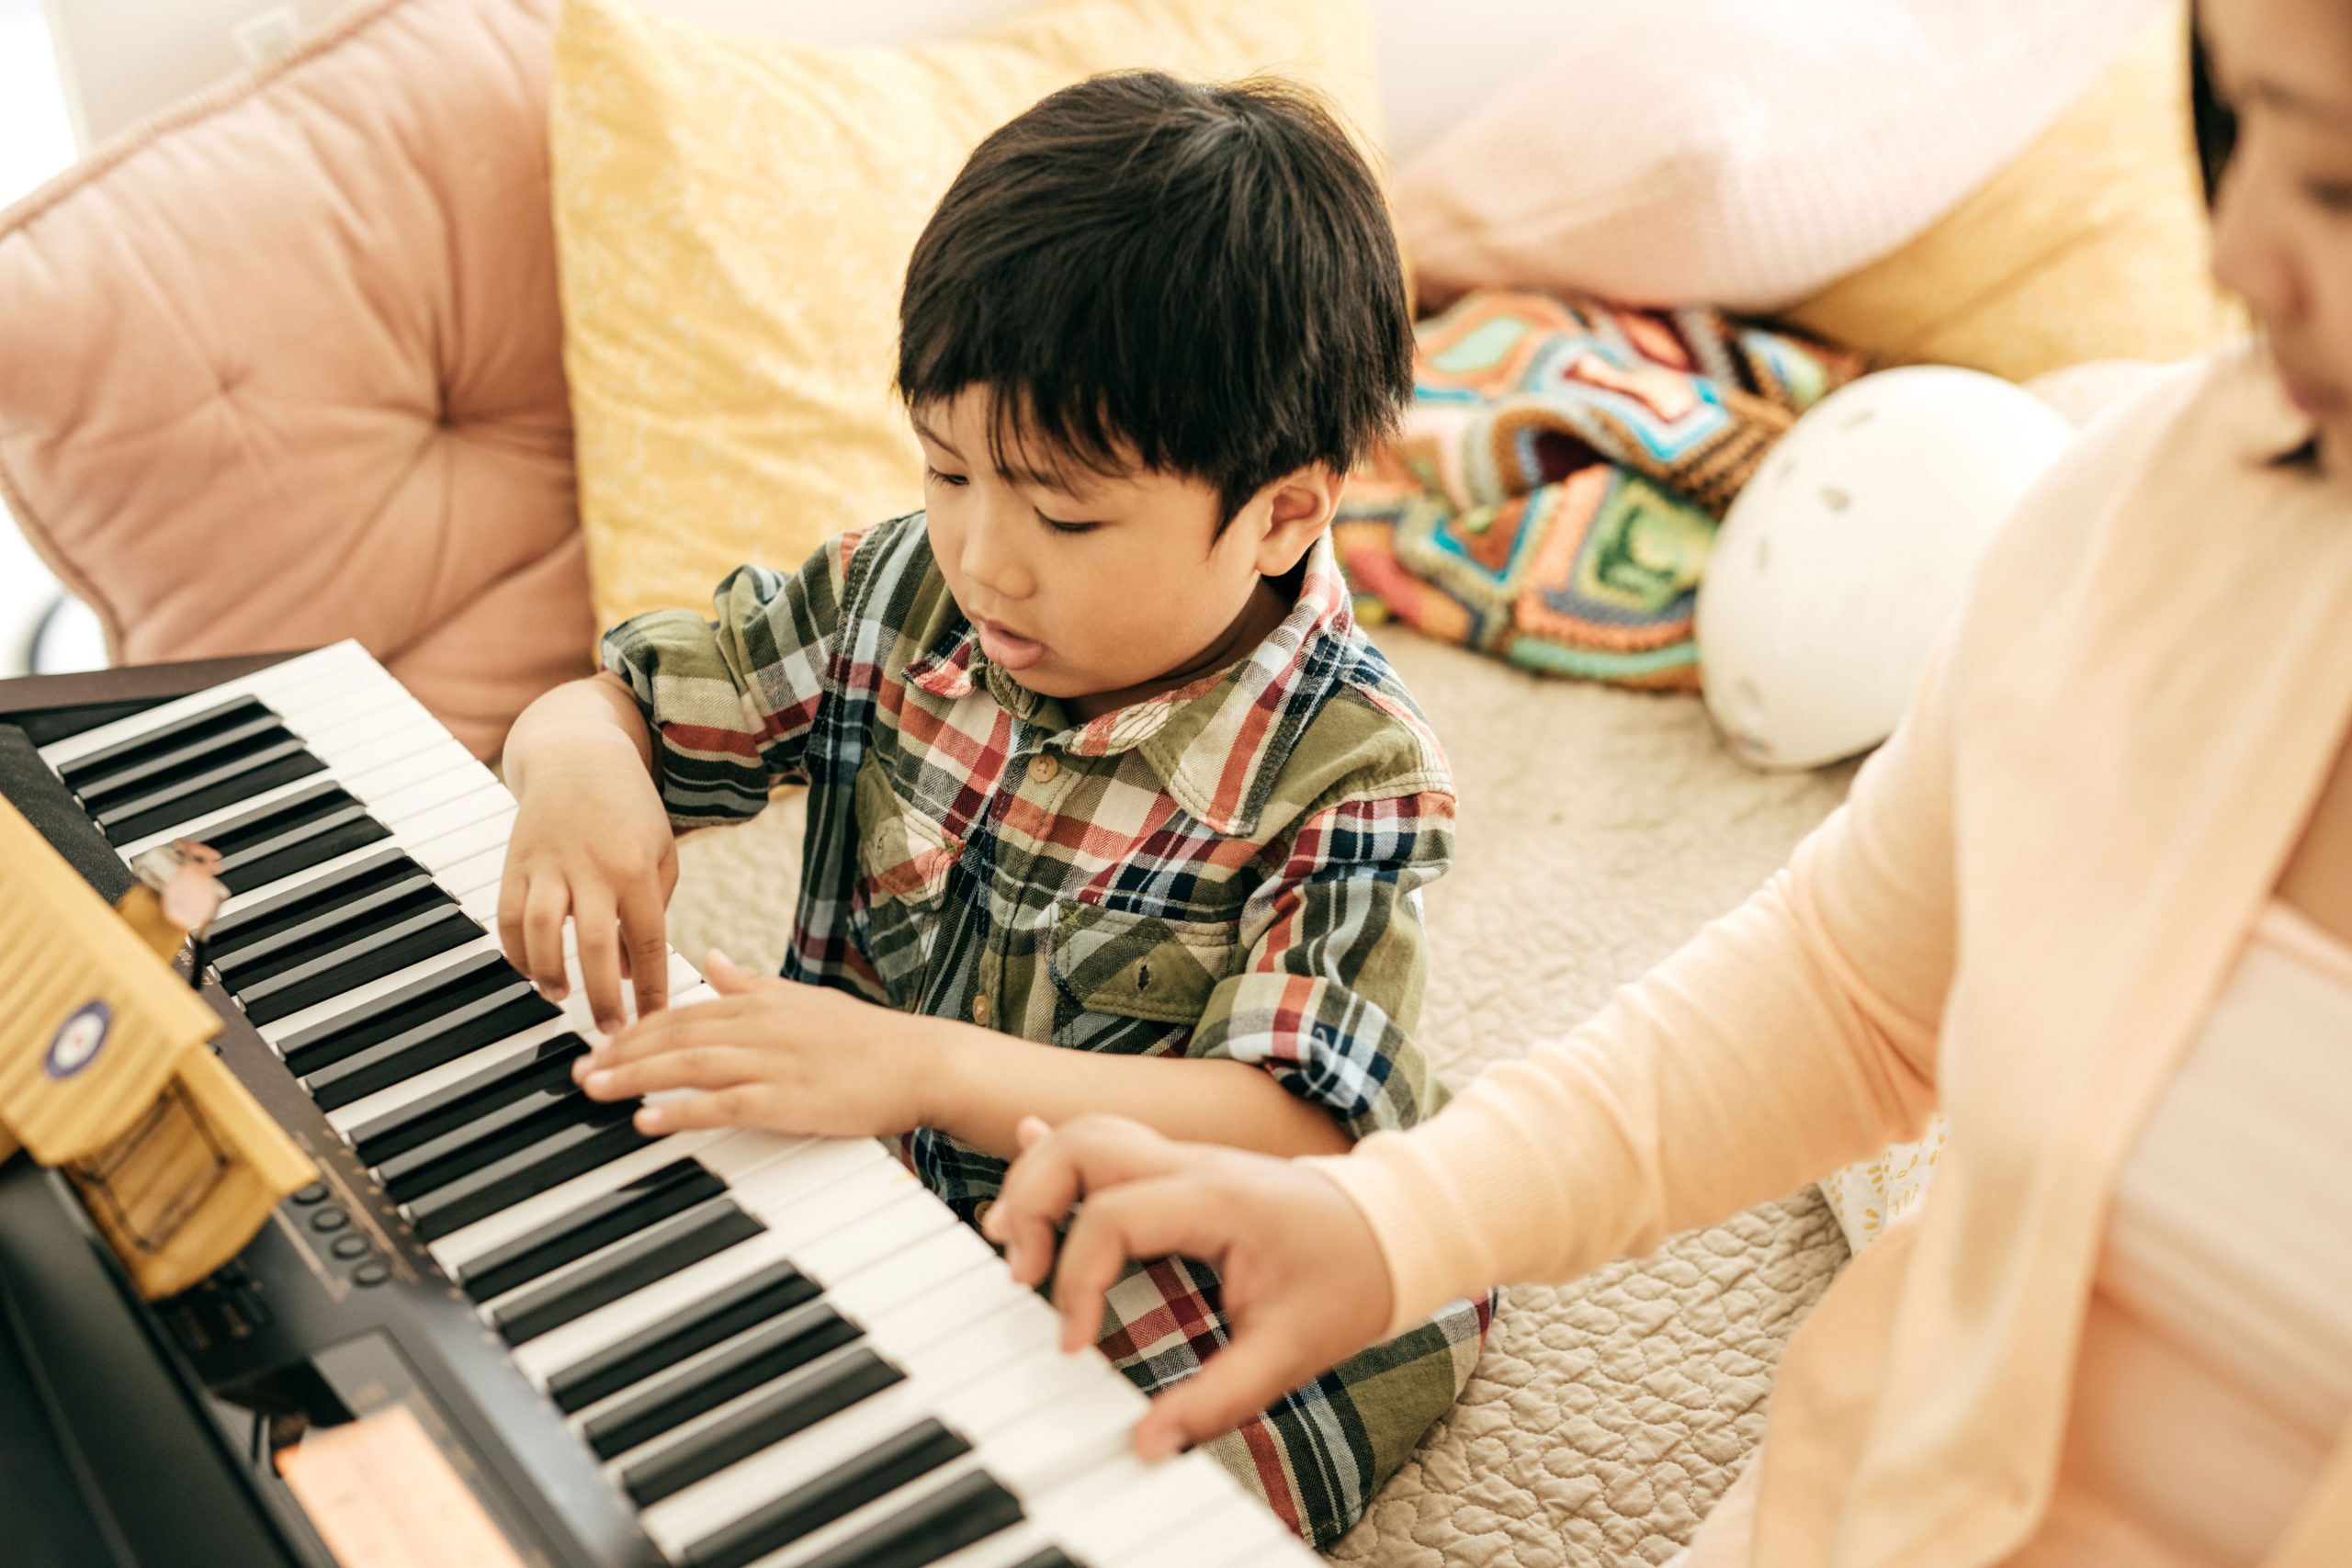 kid playing piano